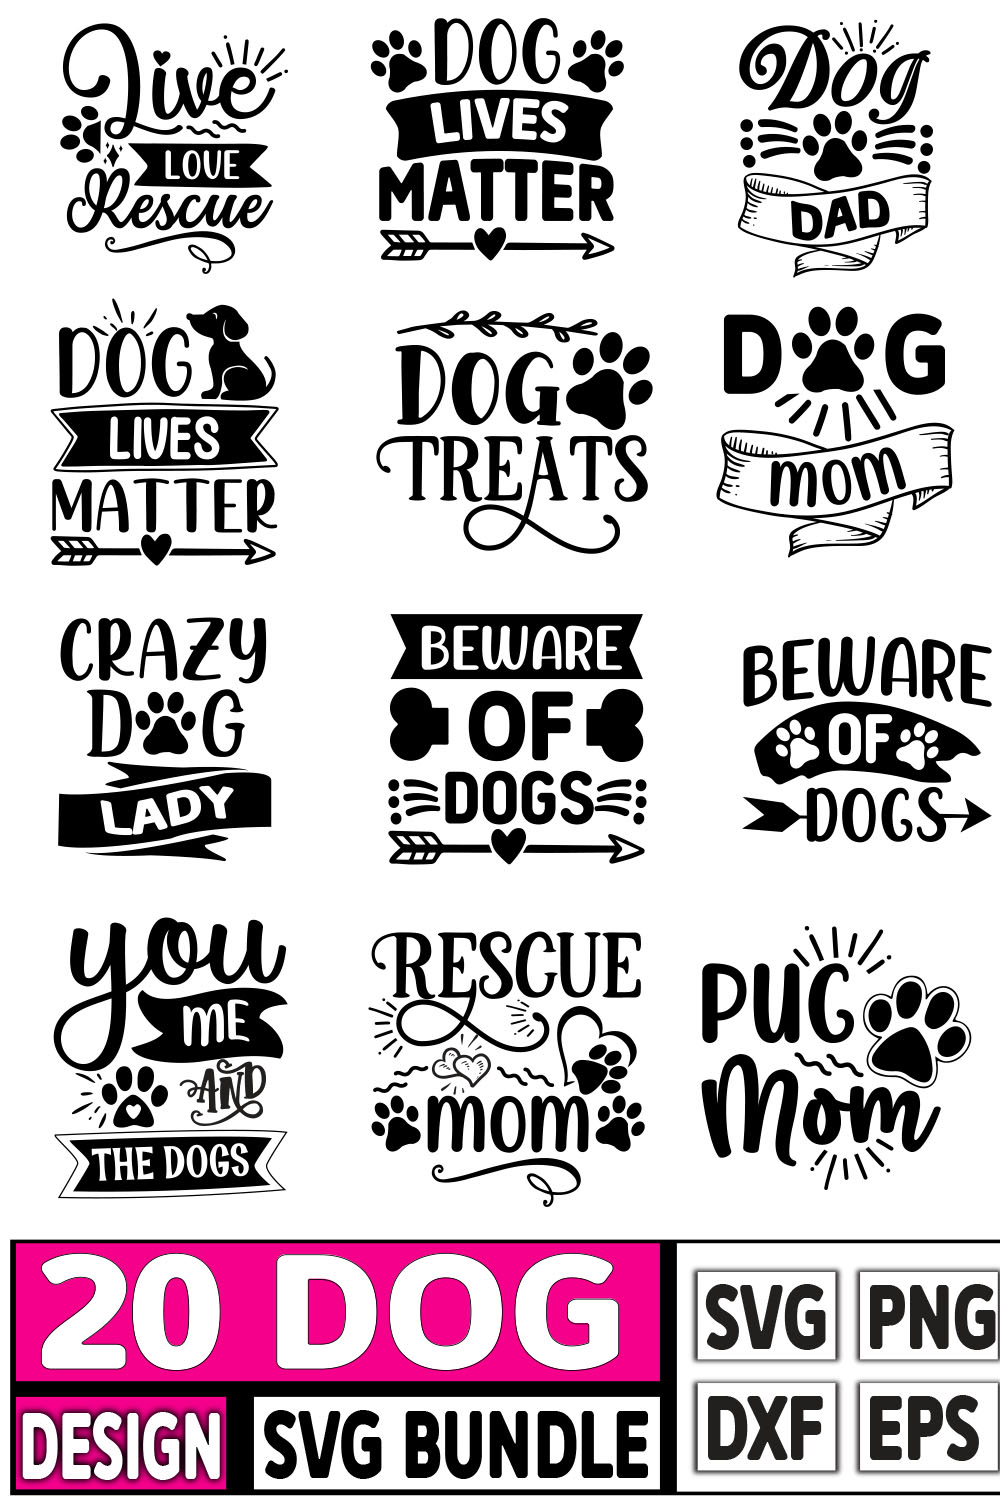 Dog Quotes SVG Design pinterest image.